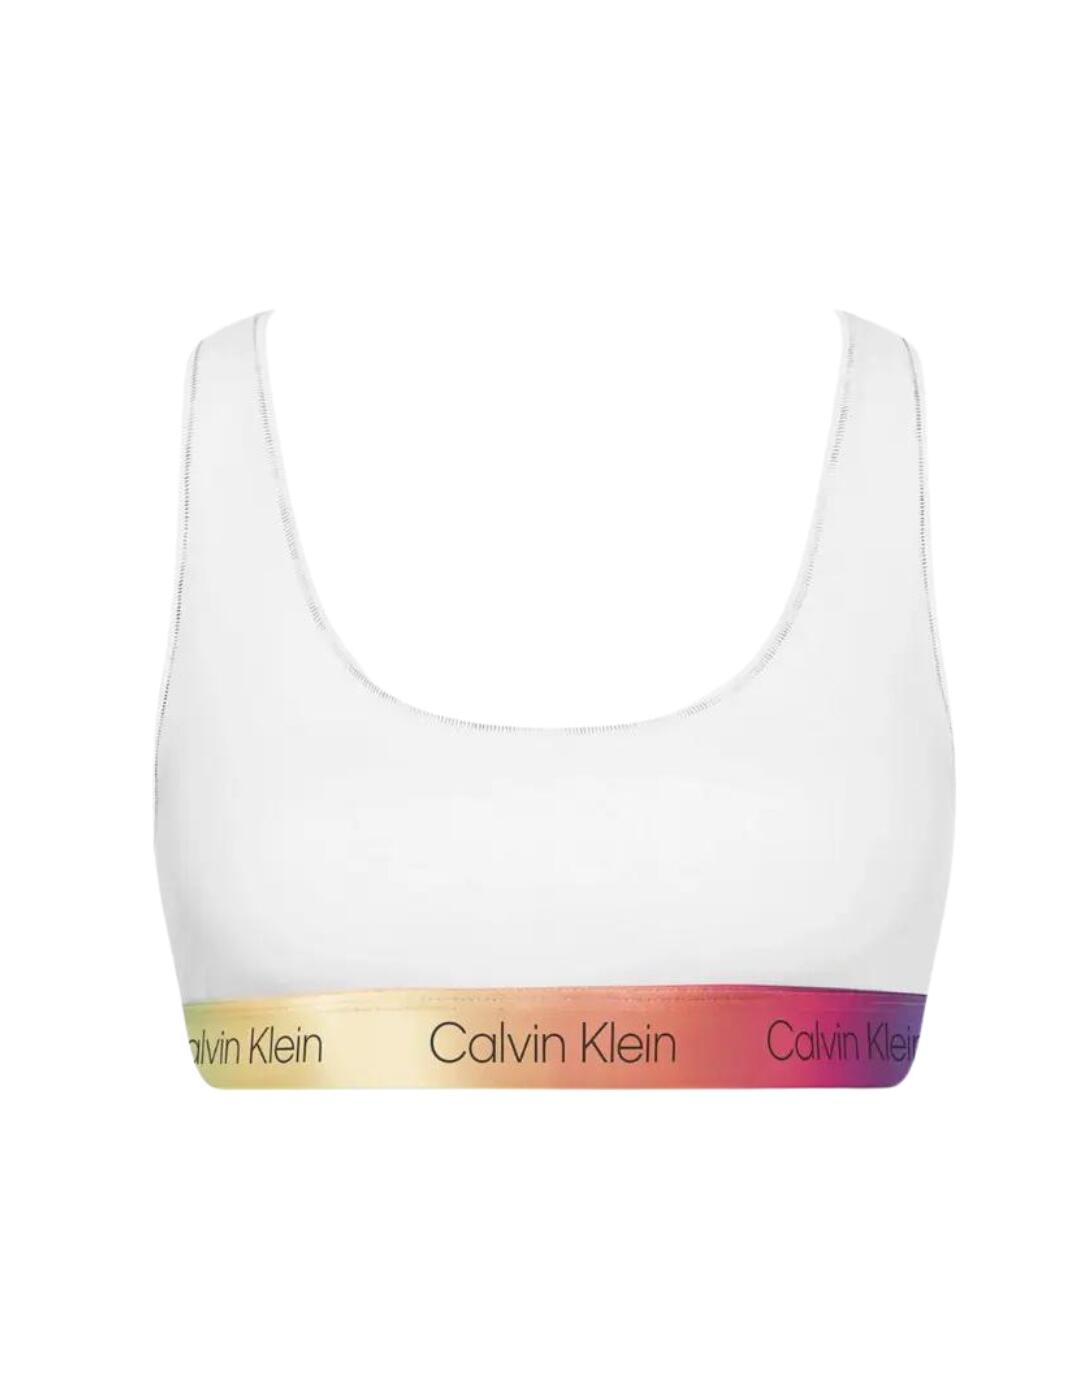 CALVIN KLEIN Pride Bralette - WHITE COMBO